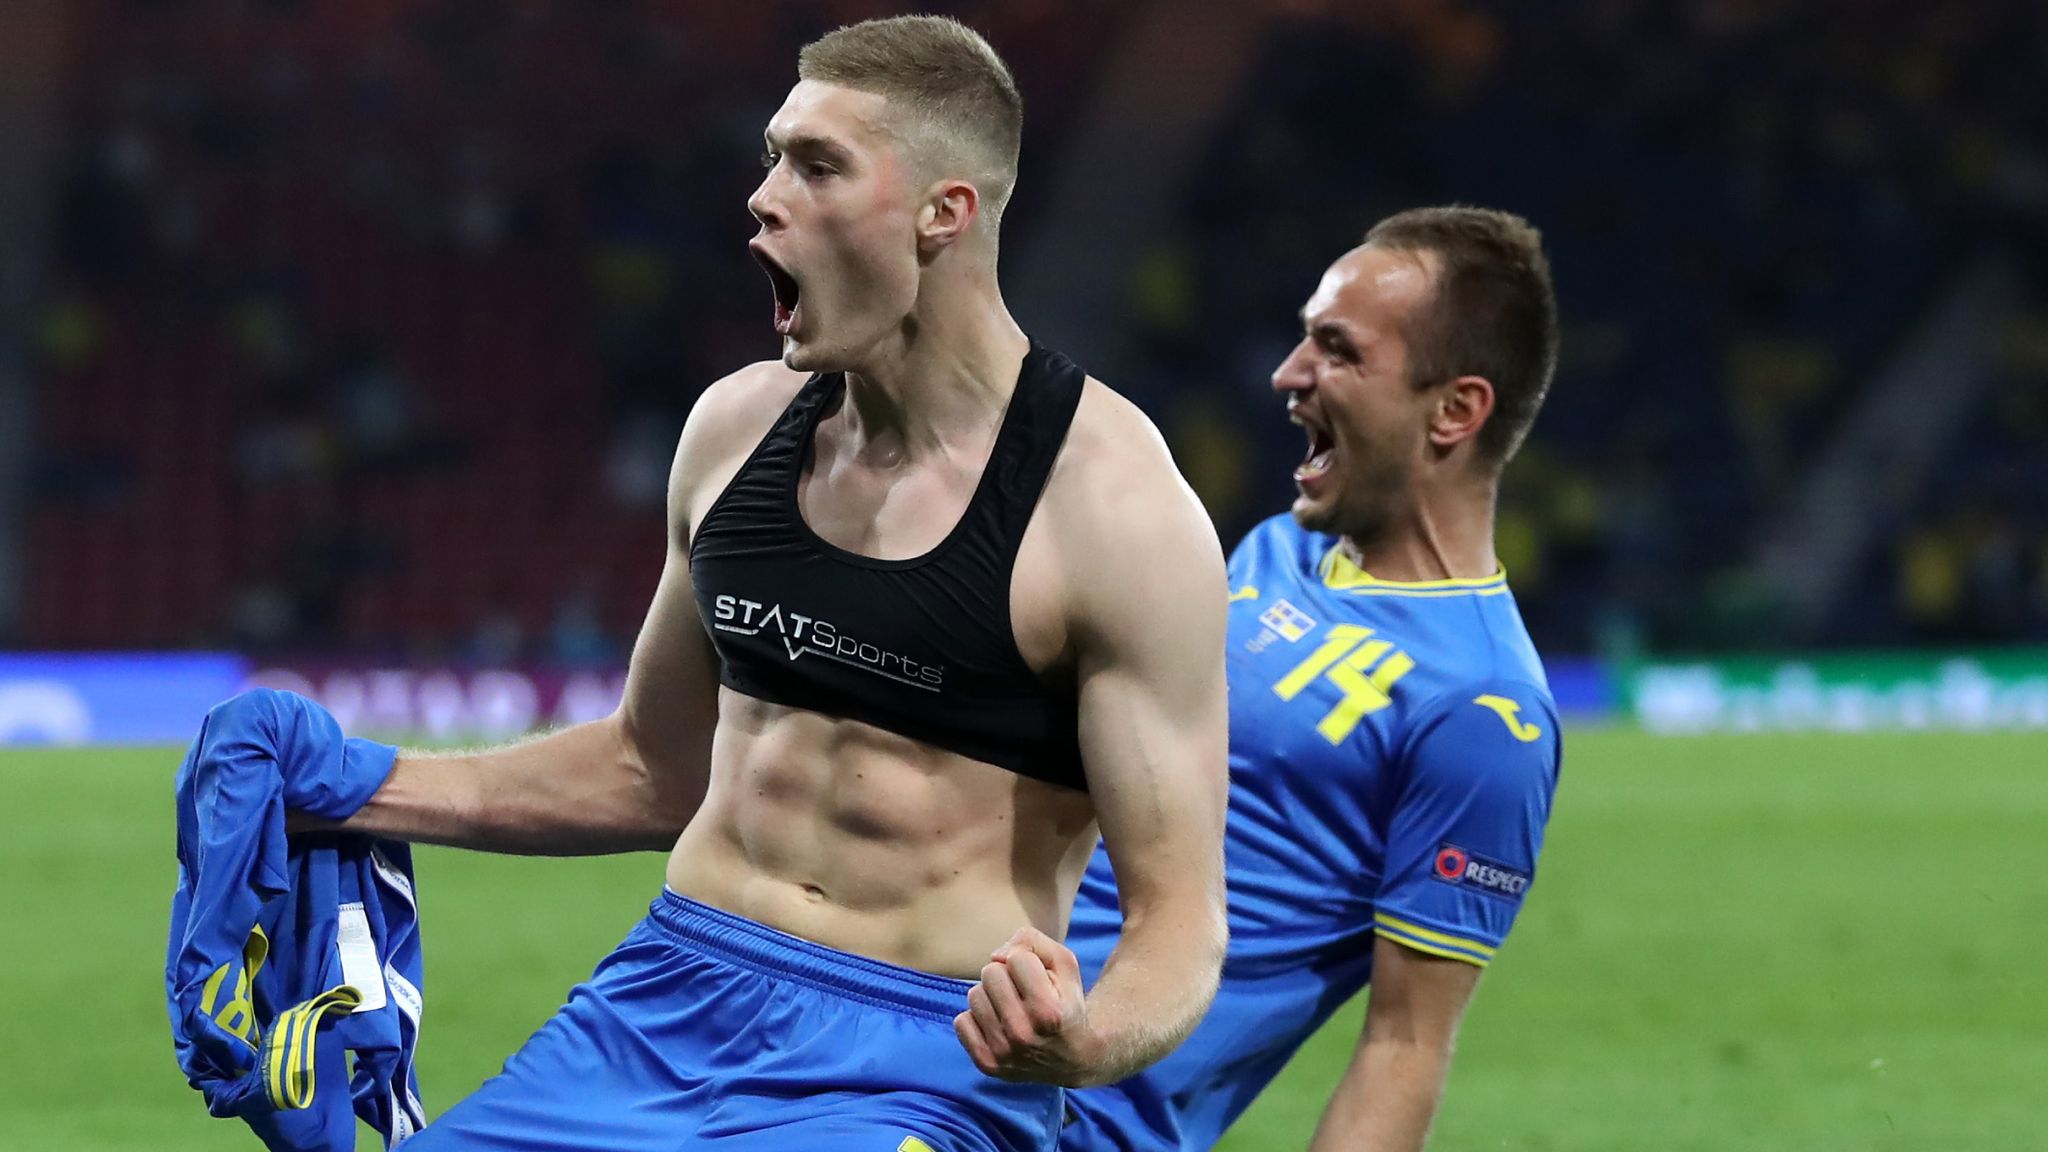 Sweden 1 - 2 Ukraine - Match Report & Highlights